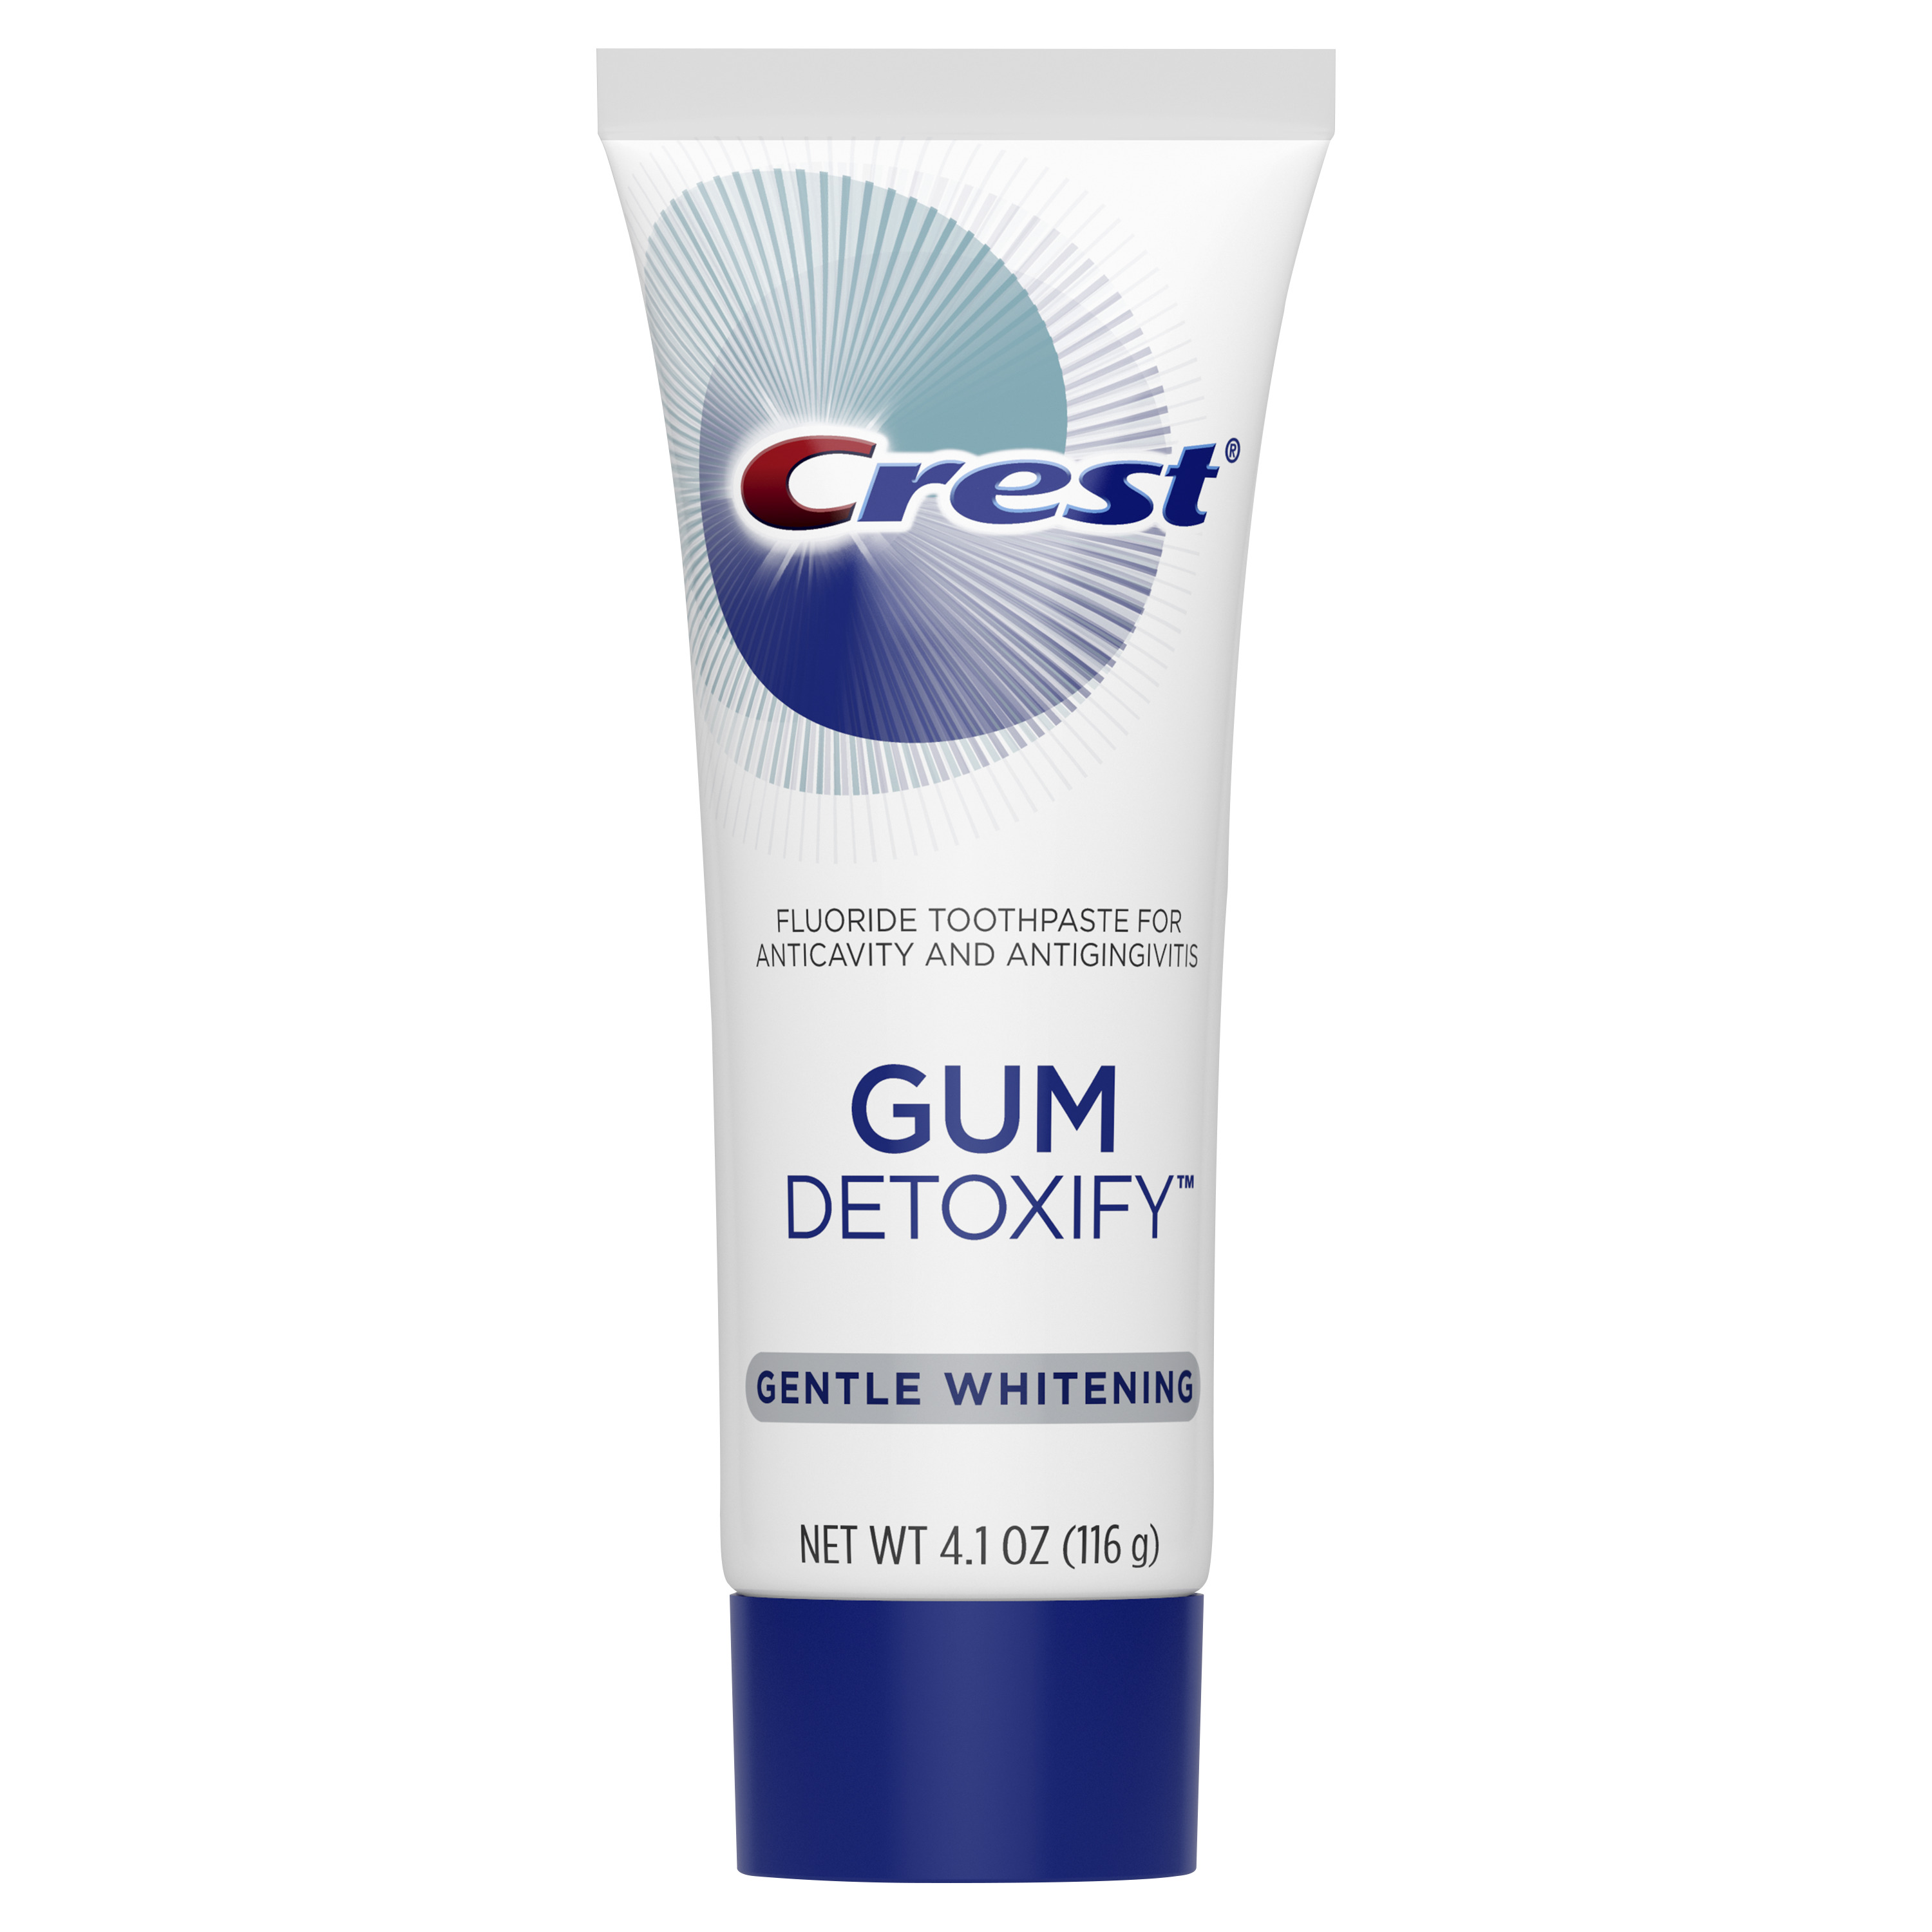 Crest Gum Detoxify Gentle Whitening Toothpaste, 4.1 oz - image 2 of 7